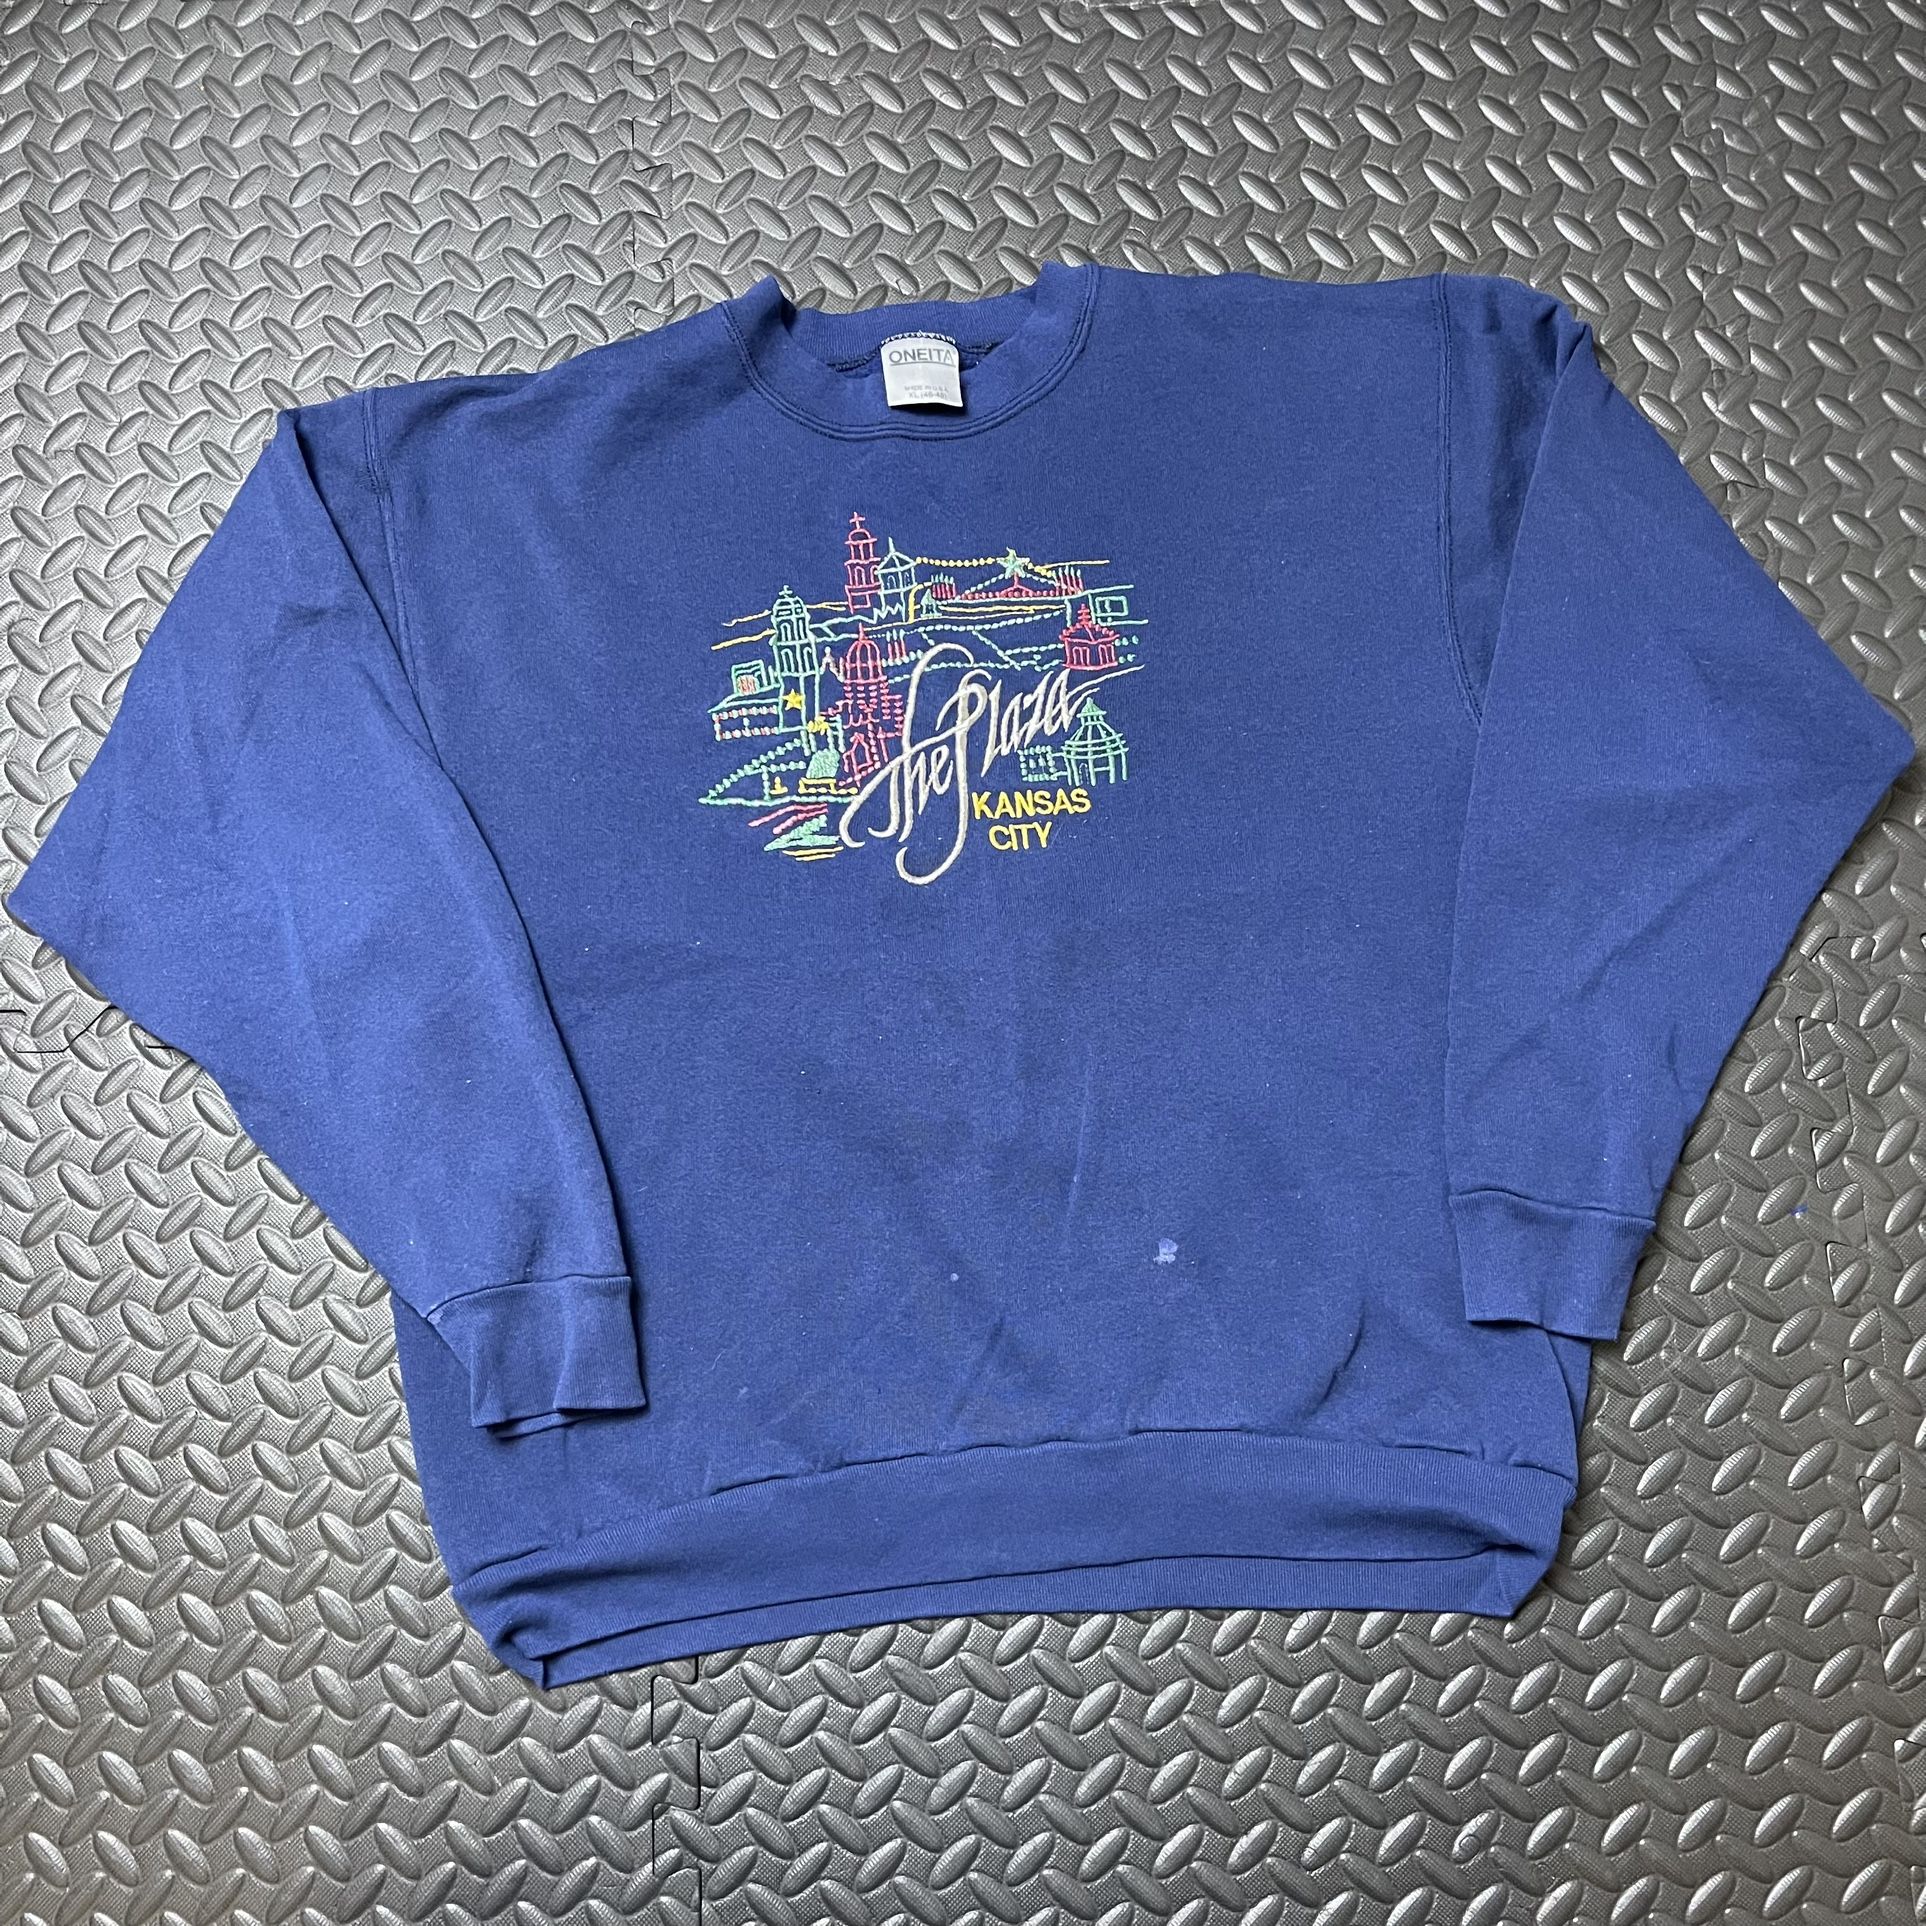 Vintage 90s The Plaza Lights Kansas City Sweater Men's XL Blue Embroidered USA